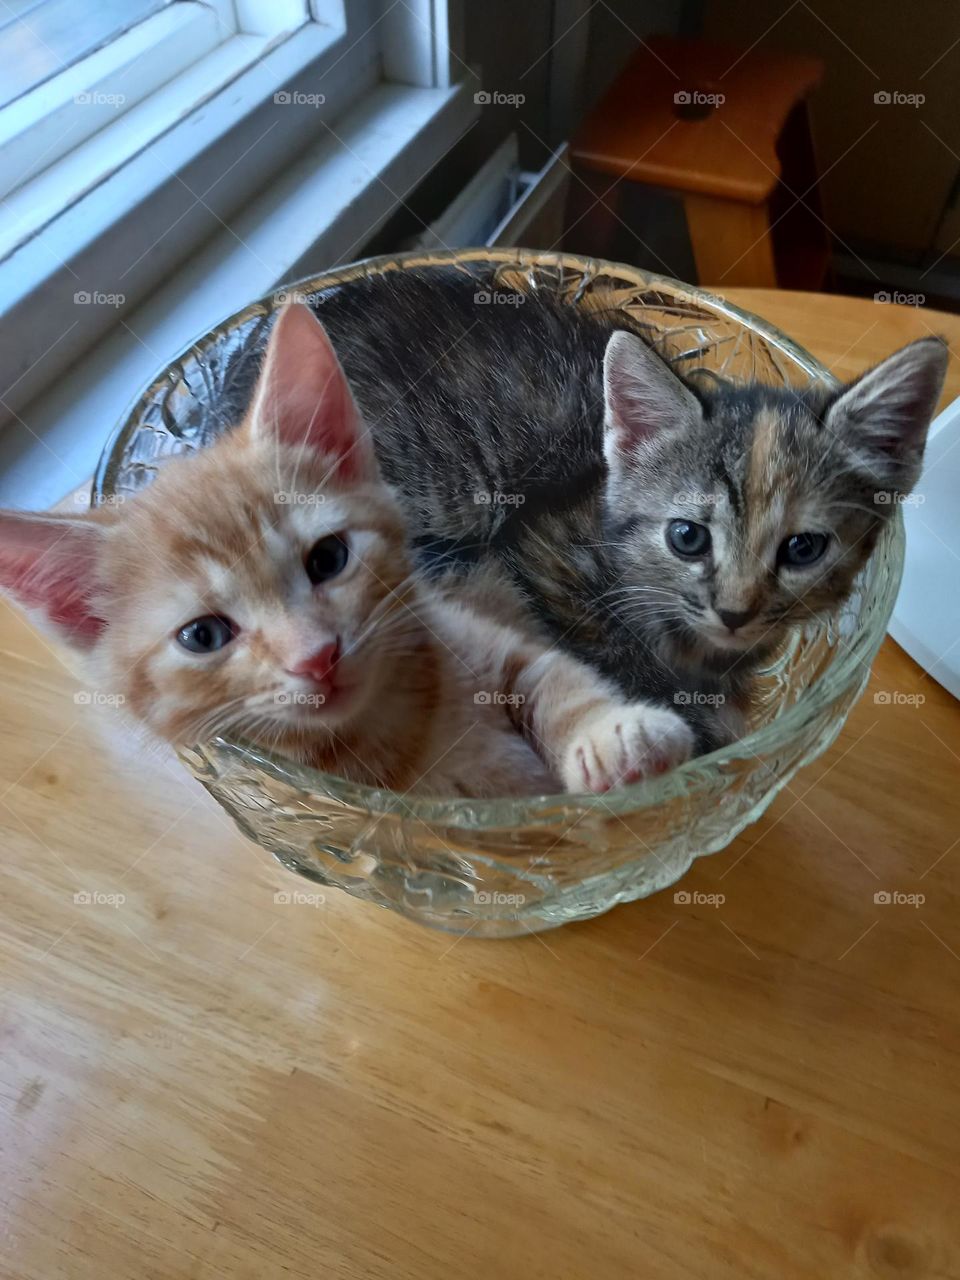 kittens in a fruit bowl